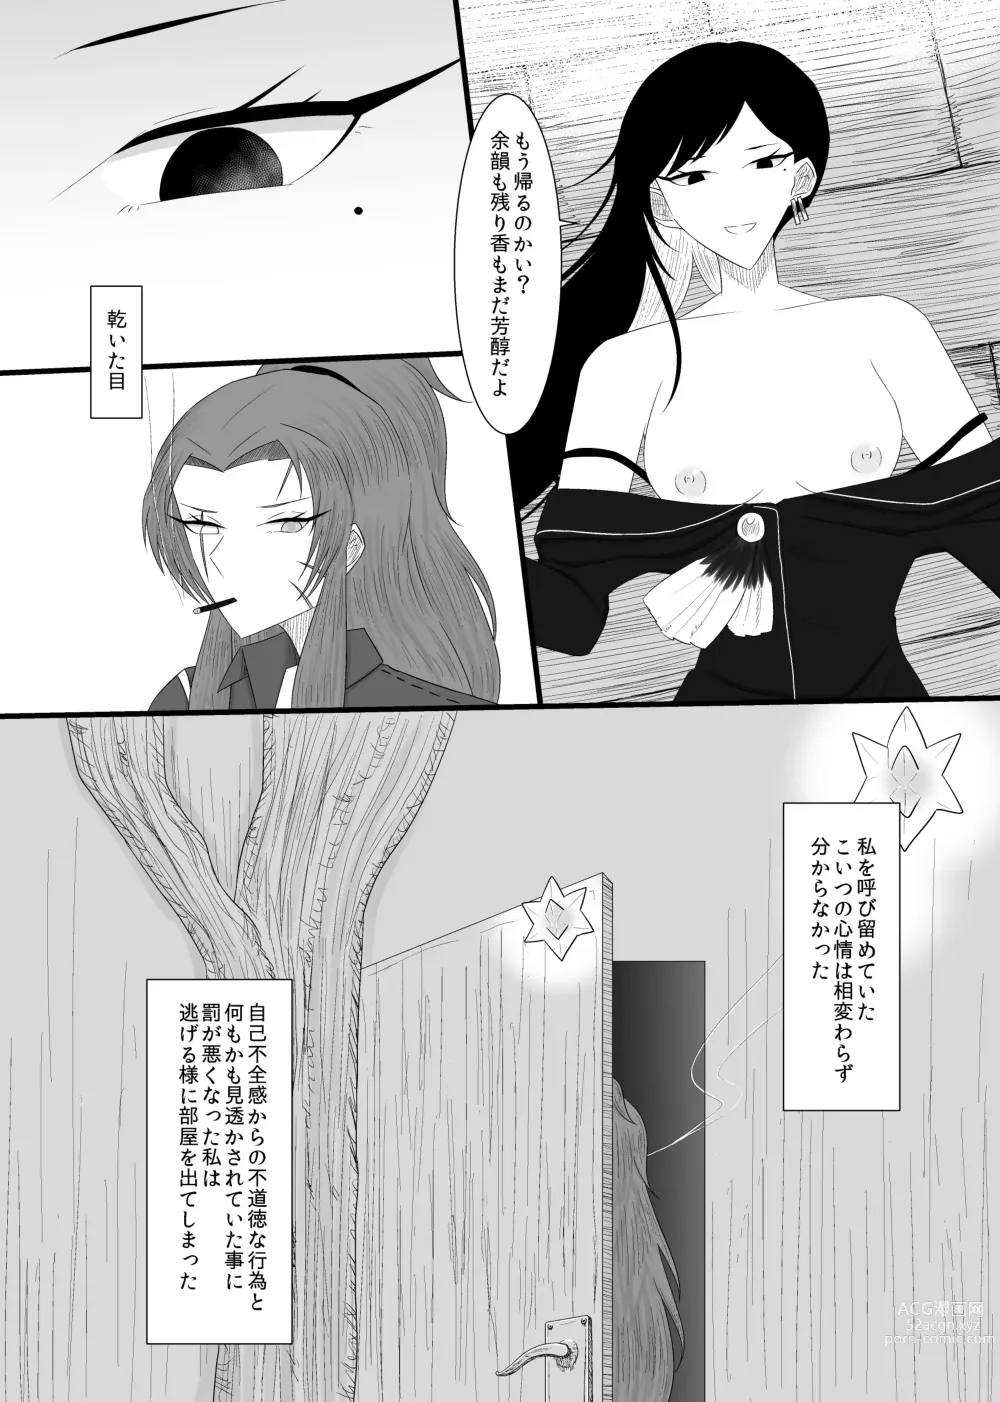 Page 13 of doujinshi 11/27 Ibento Shinkan